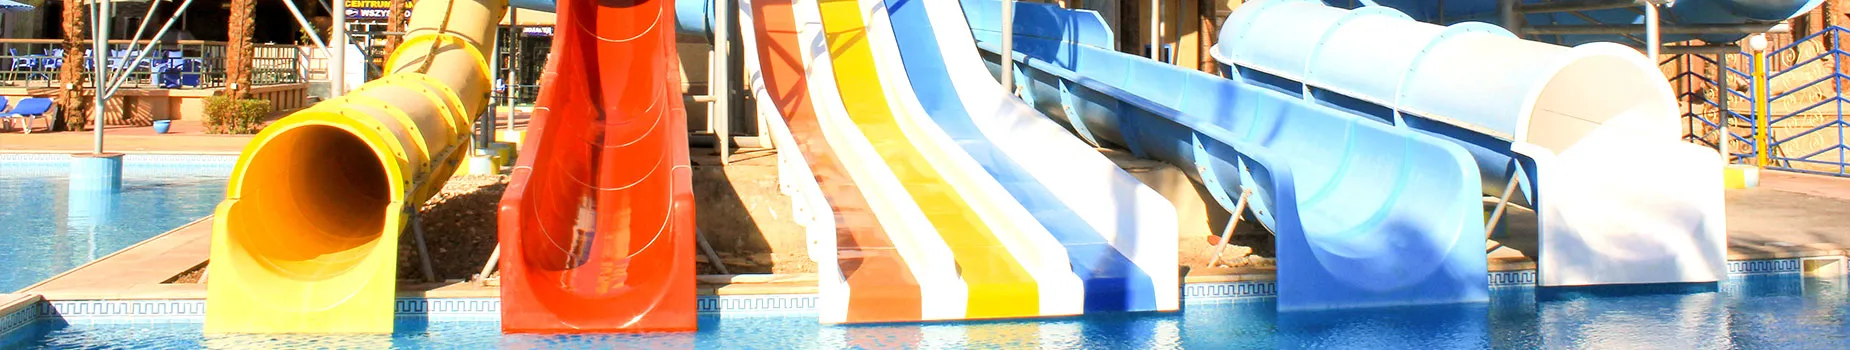 Hotels met waterpark op Lanzarote